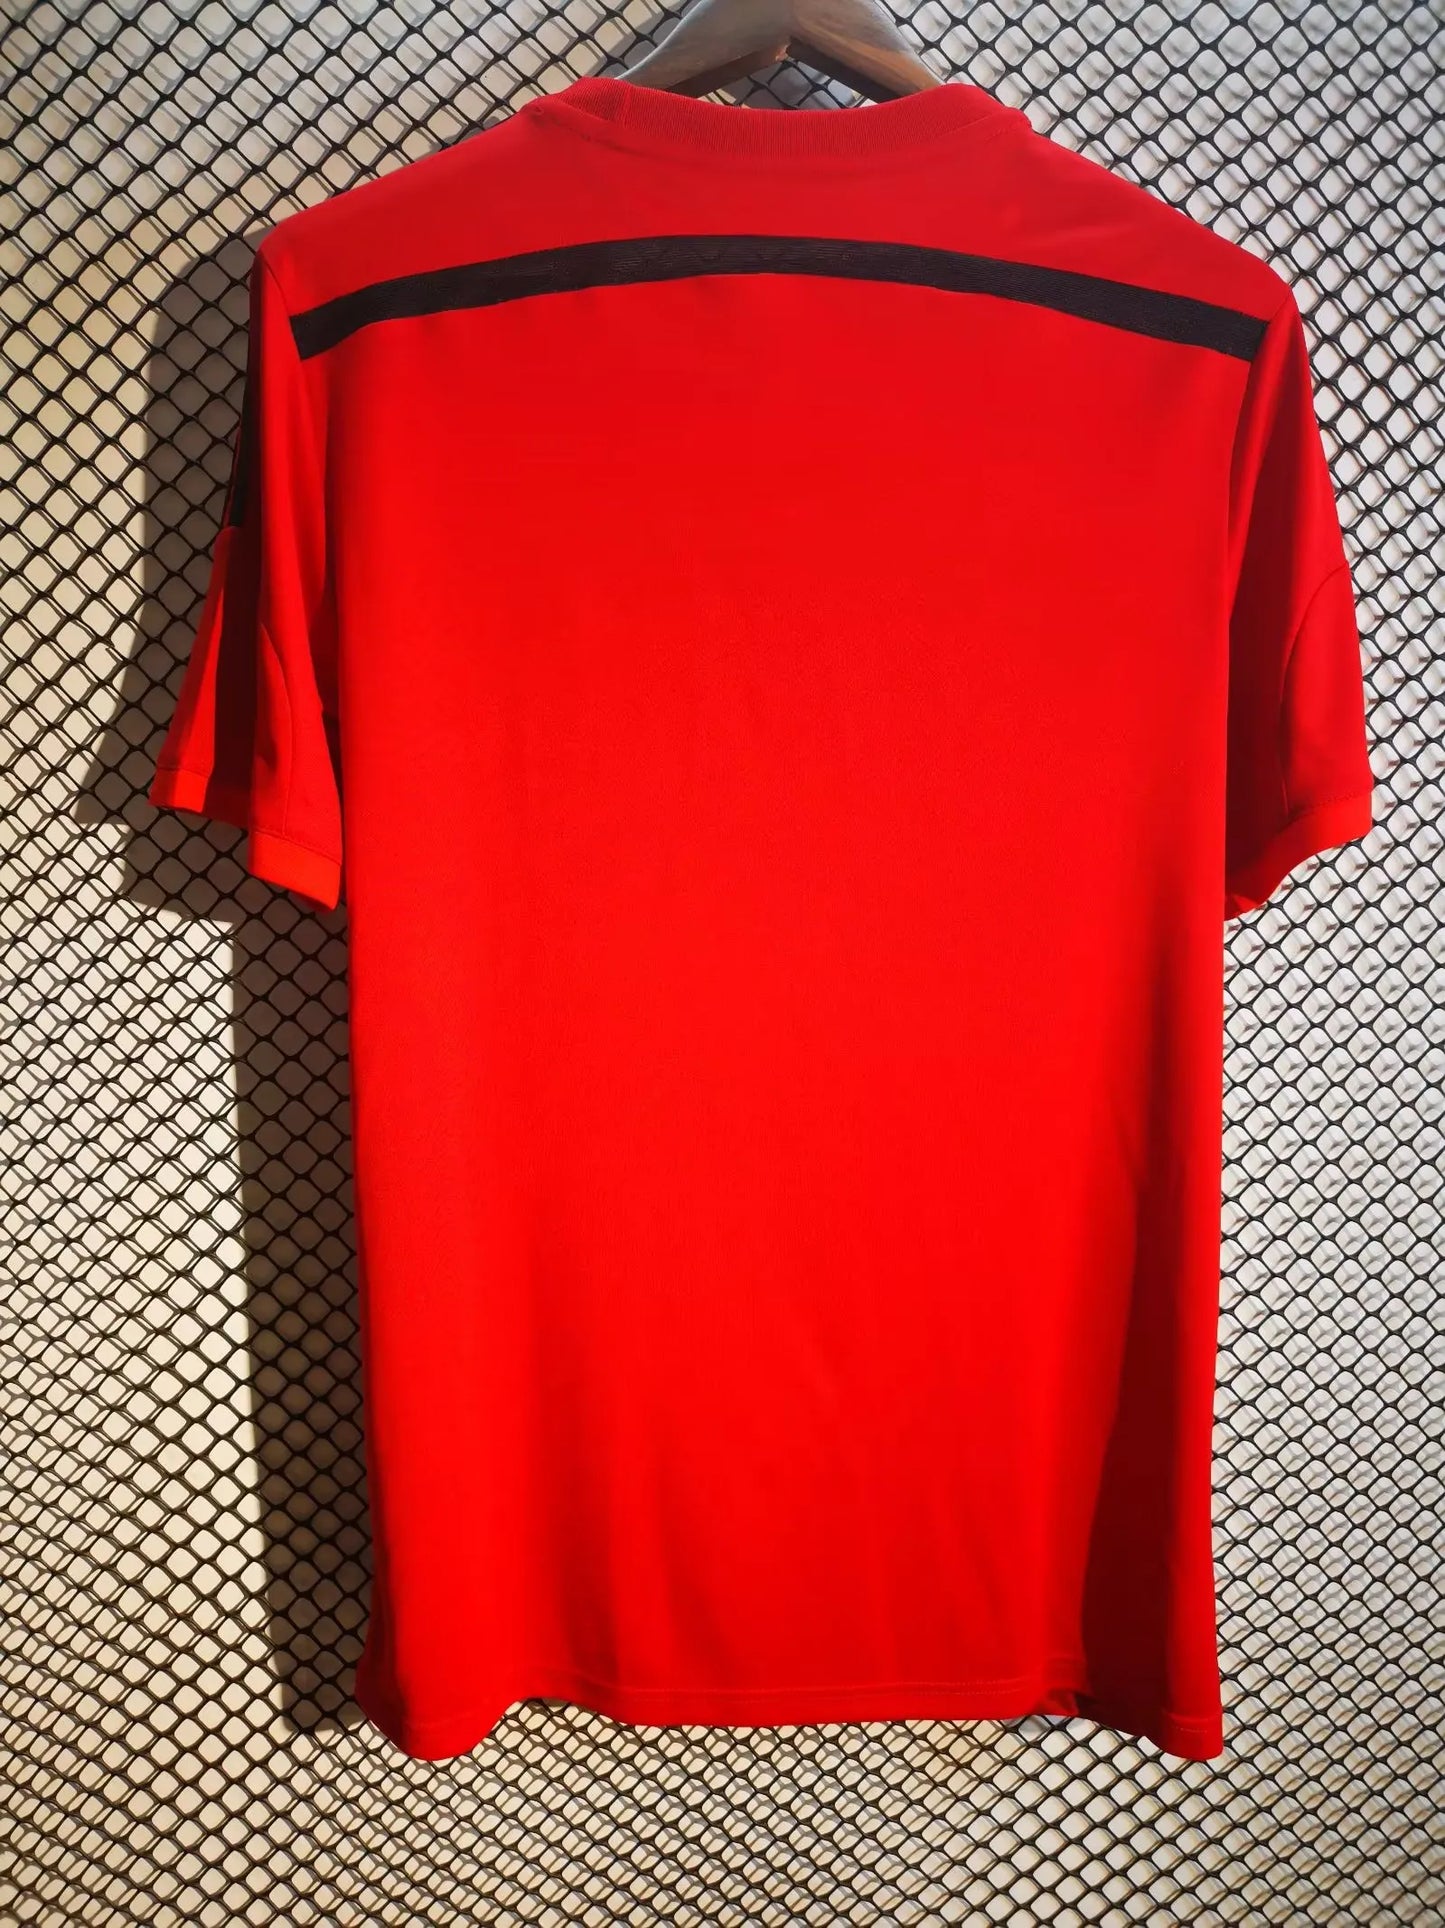 Flamengo 14-15 Third Shirt